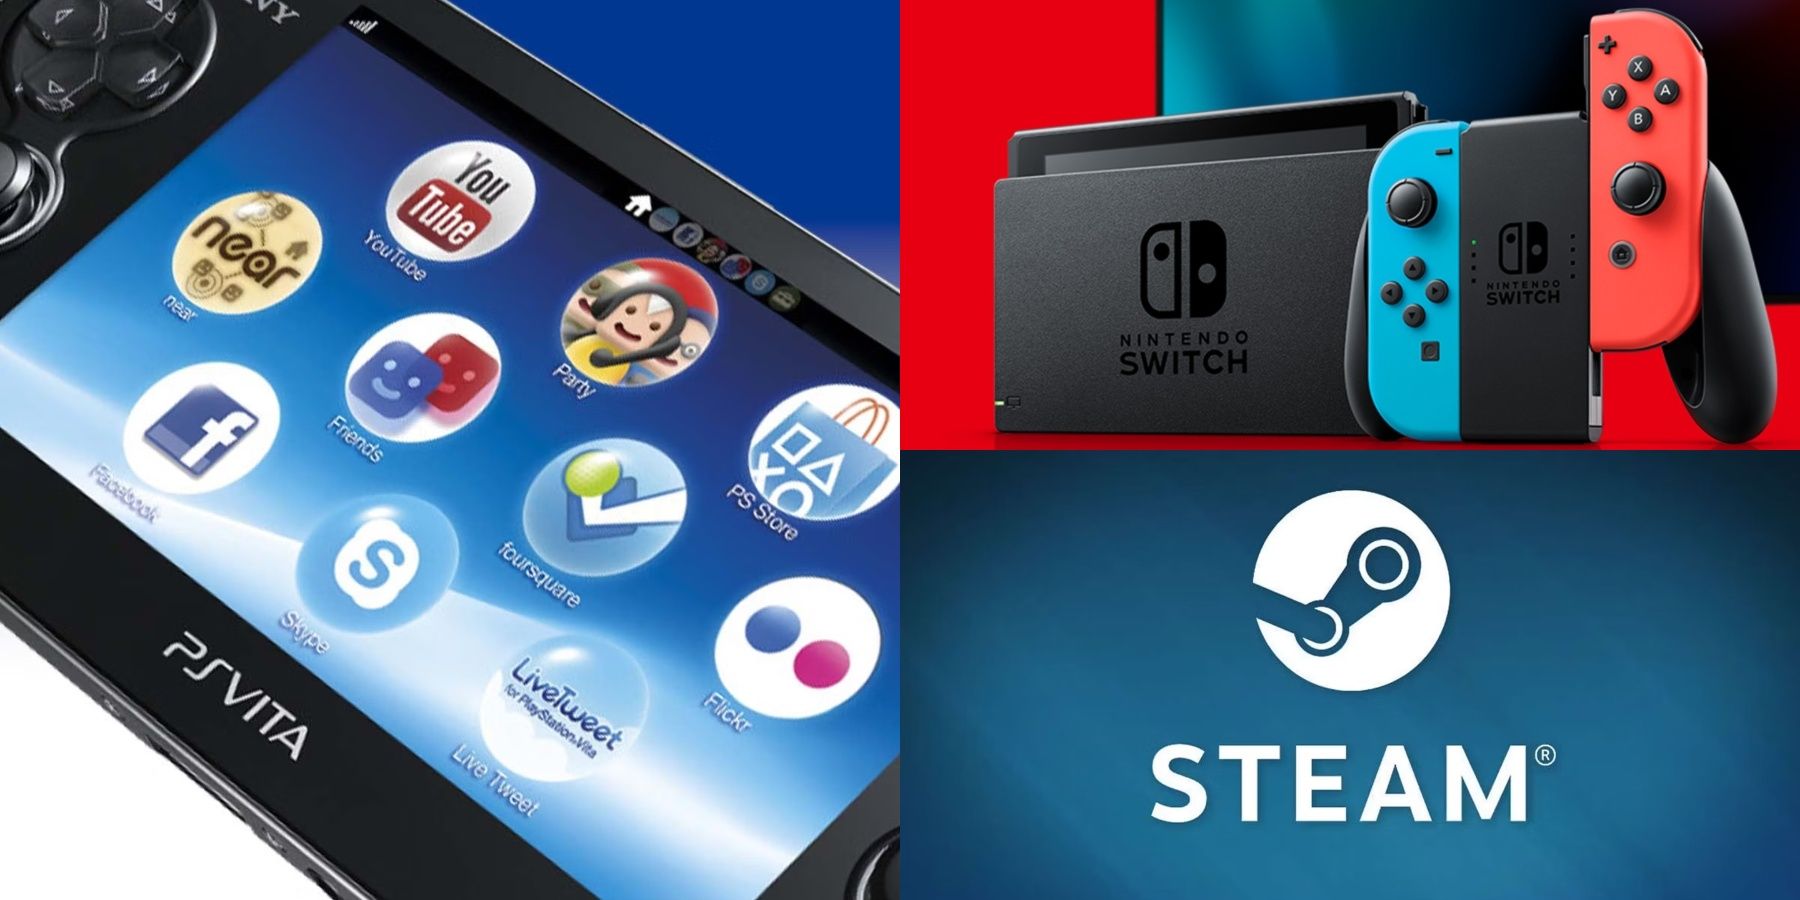 PS Vita Switch console and Steam logo